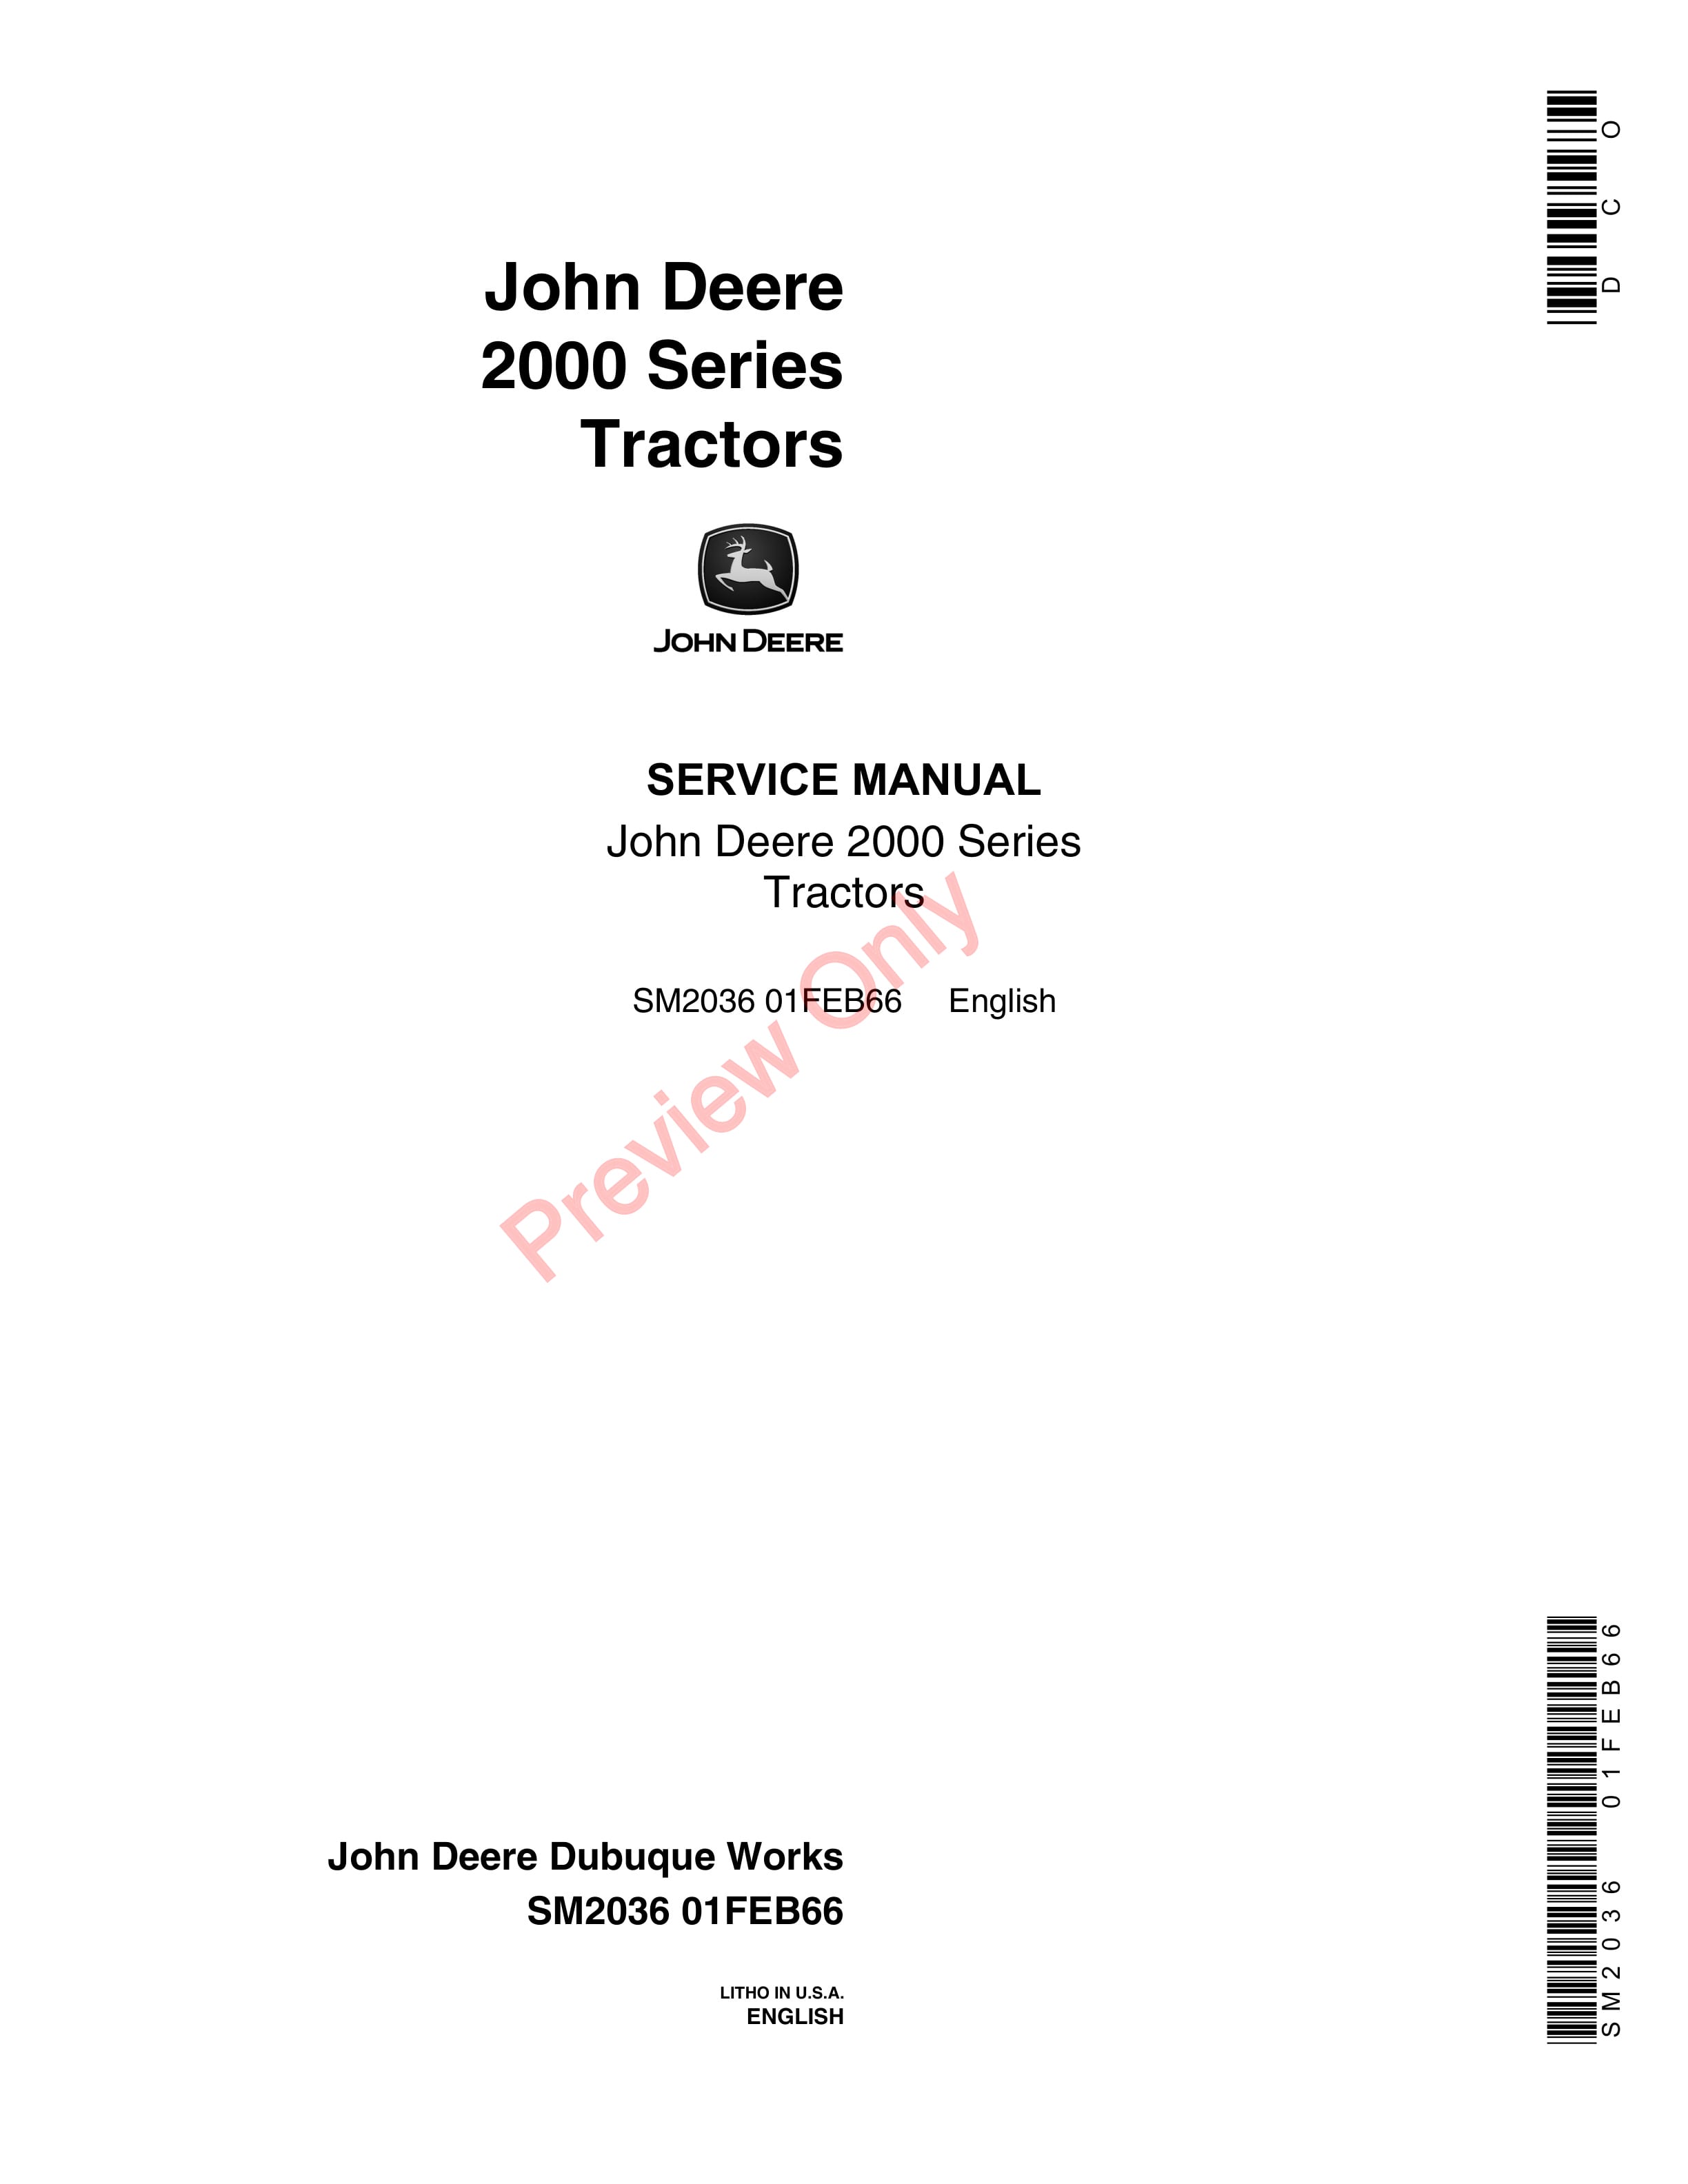 John Deere 2000 Series Tractors (GasDiesel) Service Manual SM2036 01FEB66-1